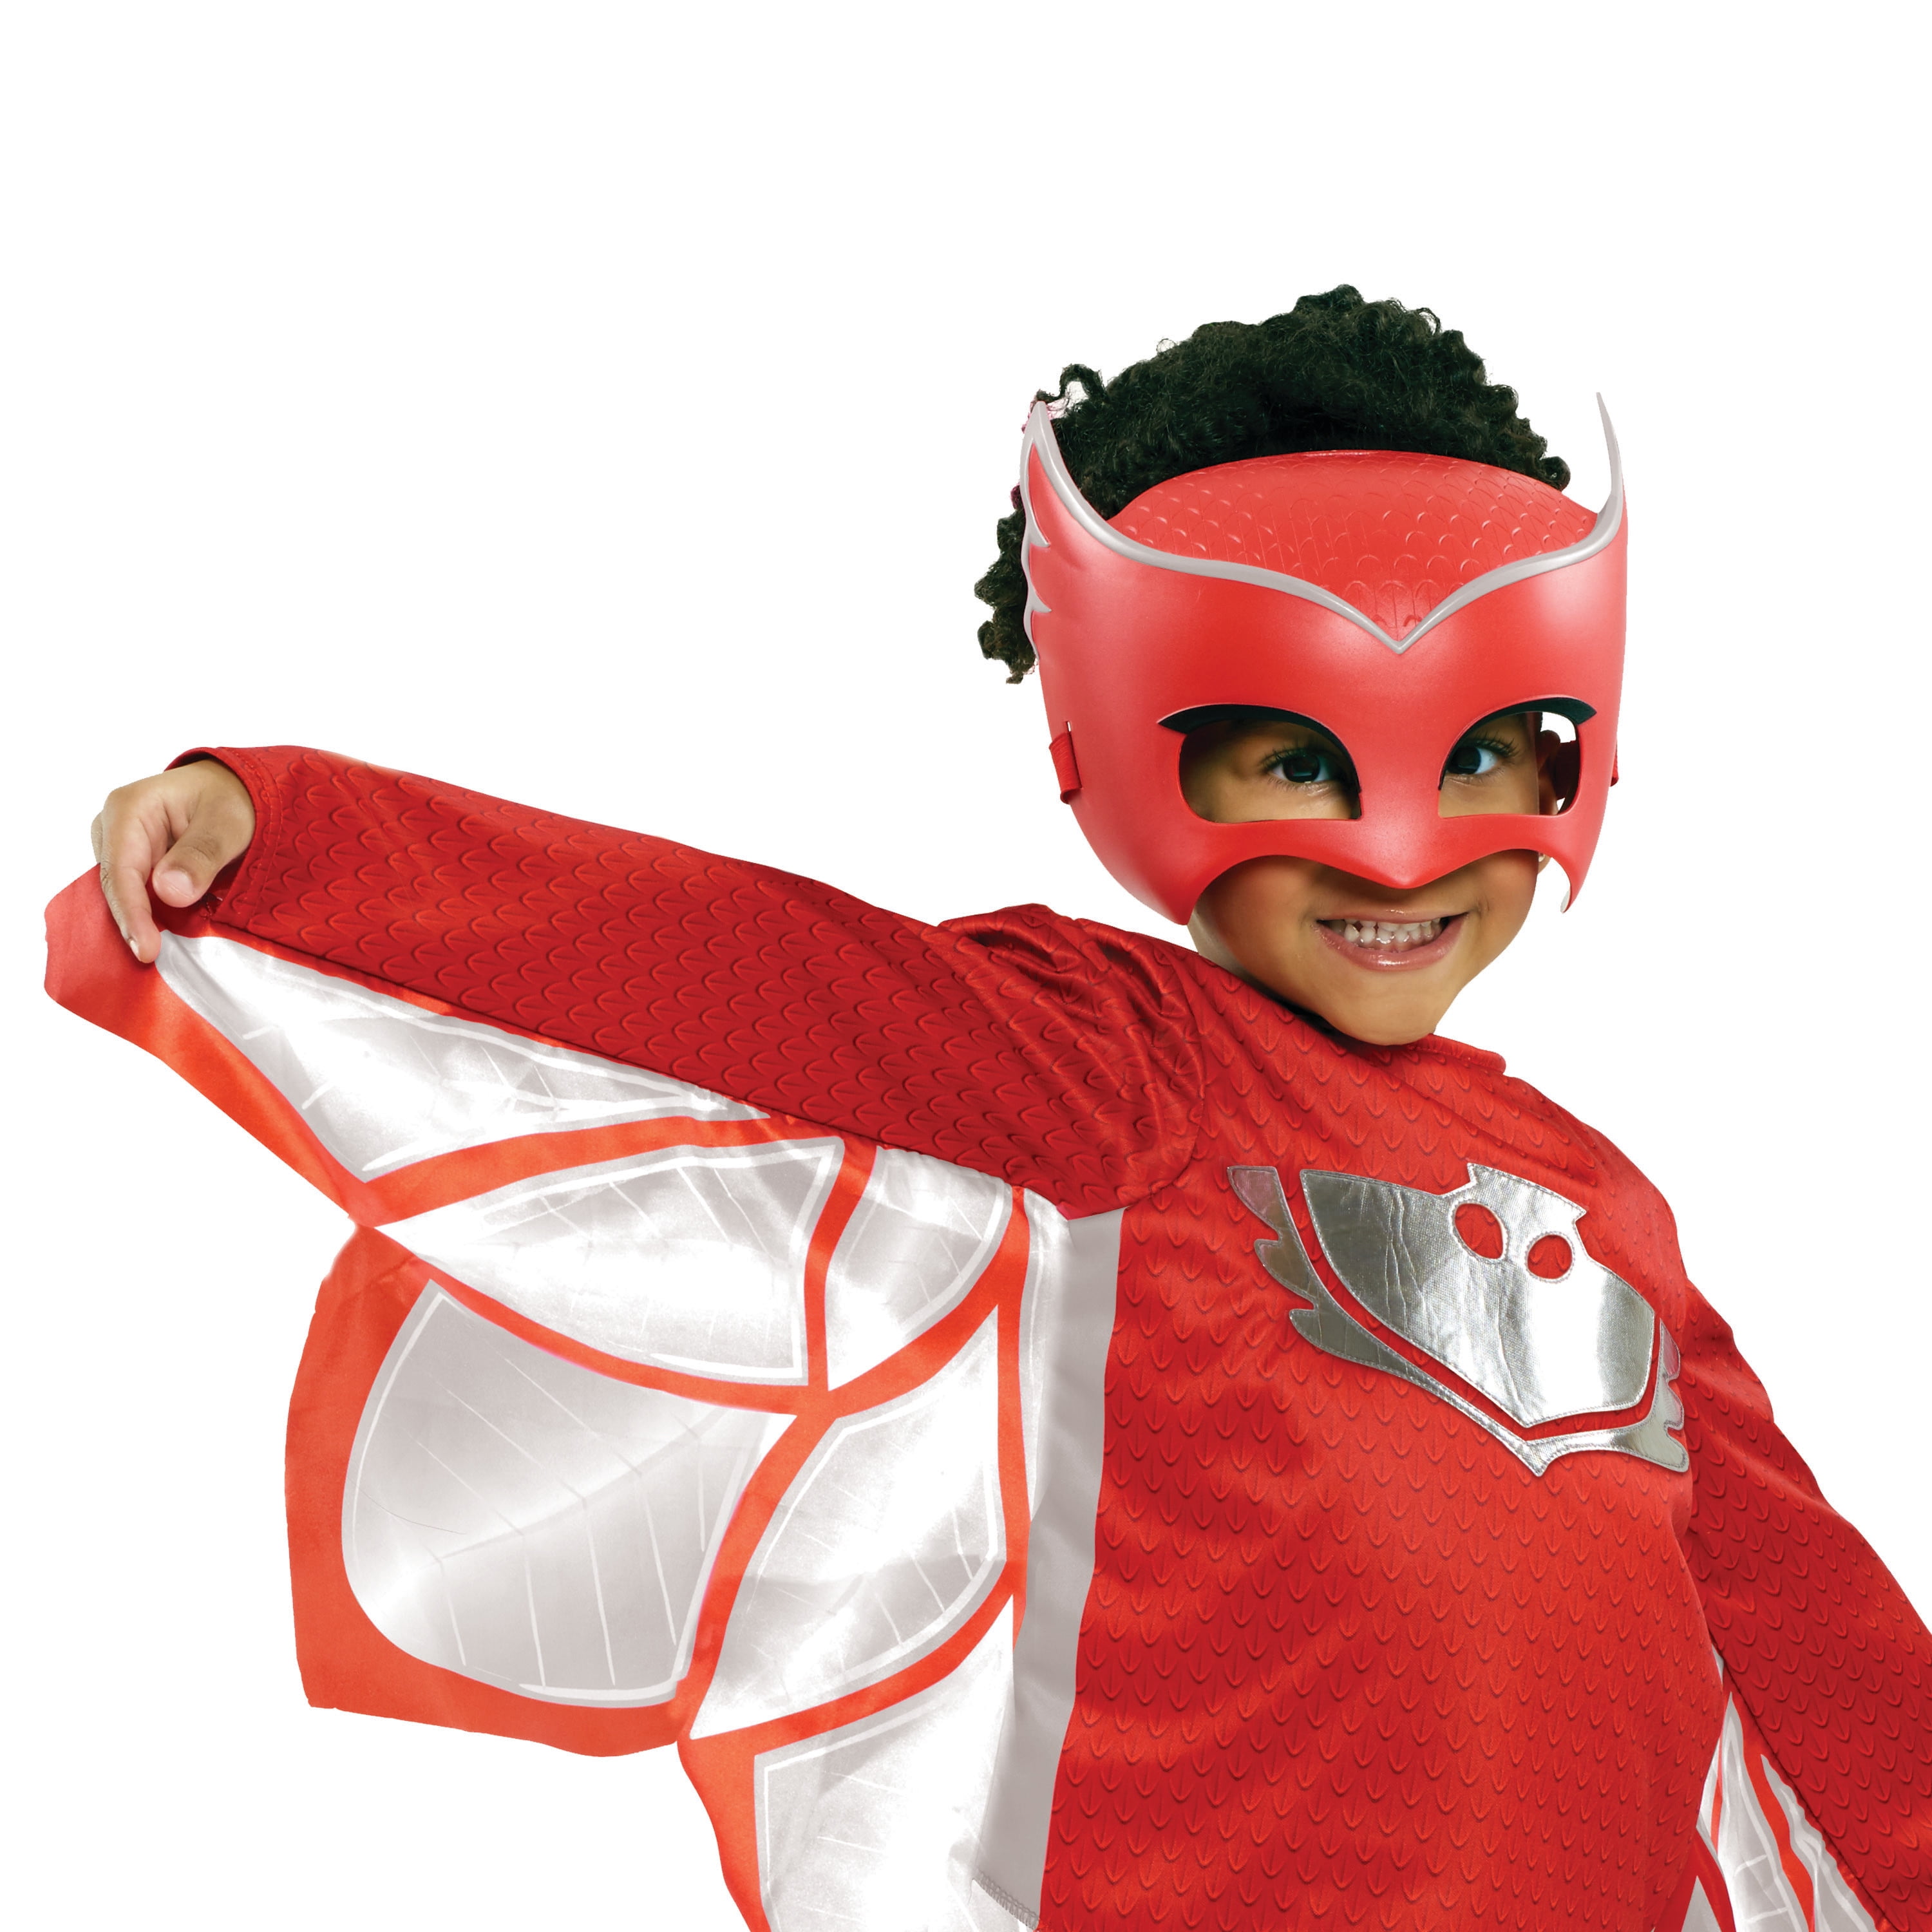 PJ Masks Owlette Dress Up Set Includes Shirt & Mask Red Fits Sizes 4-6X Costume 